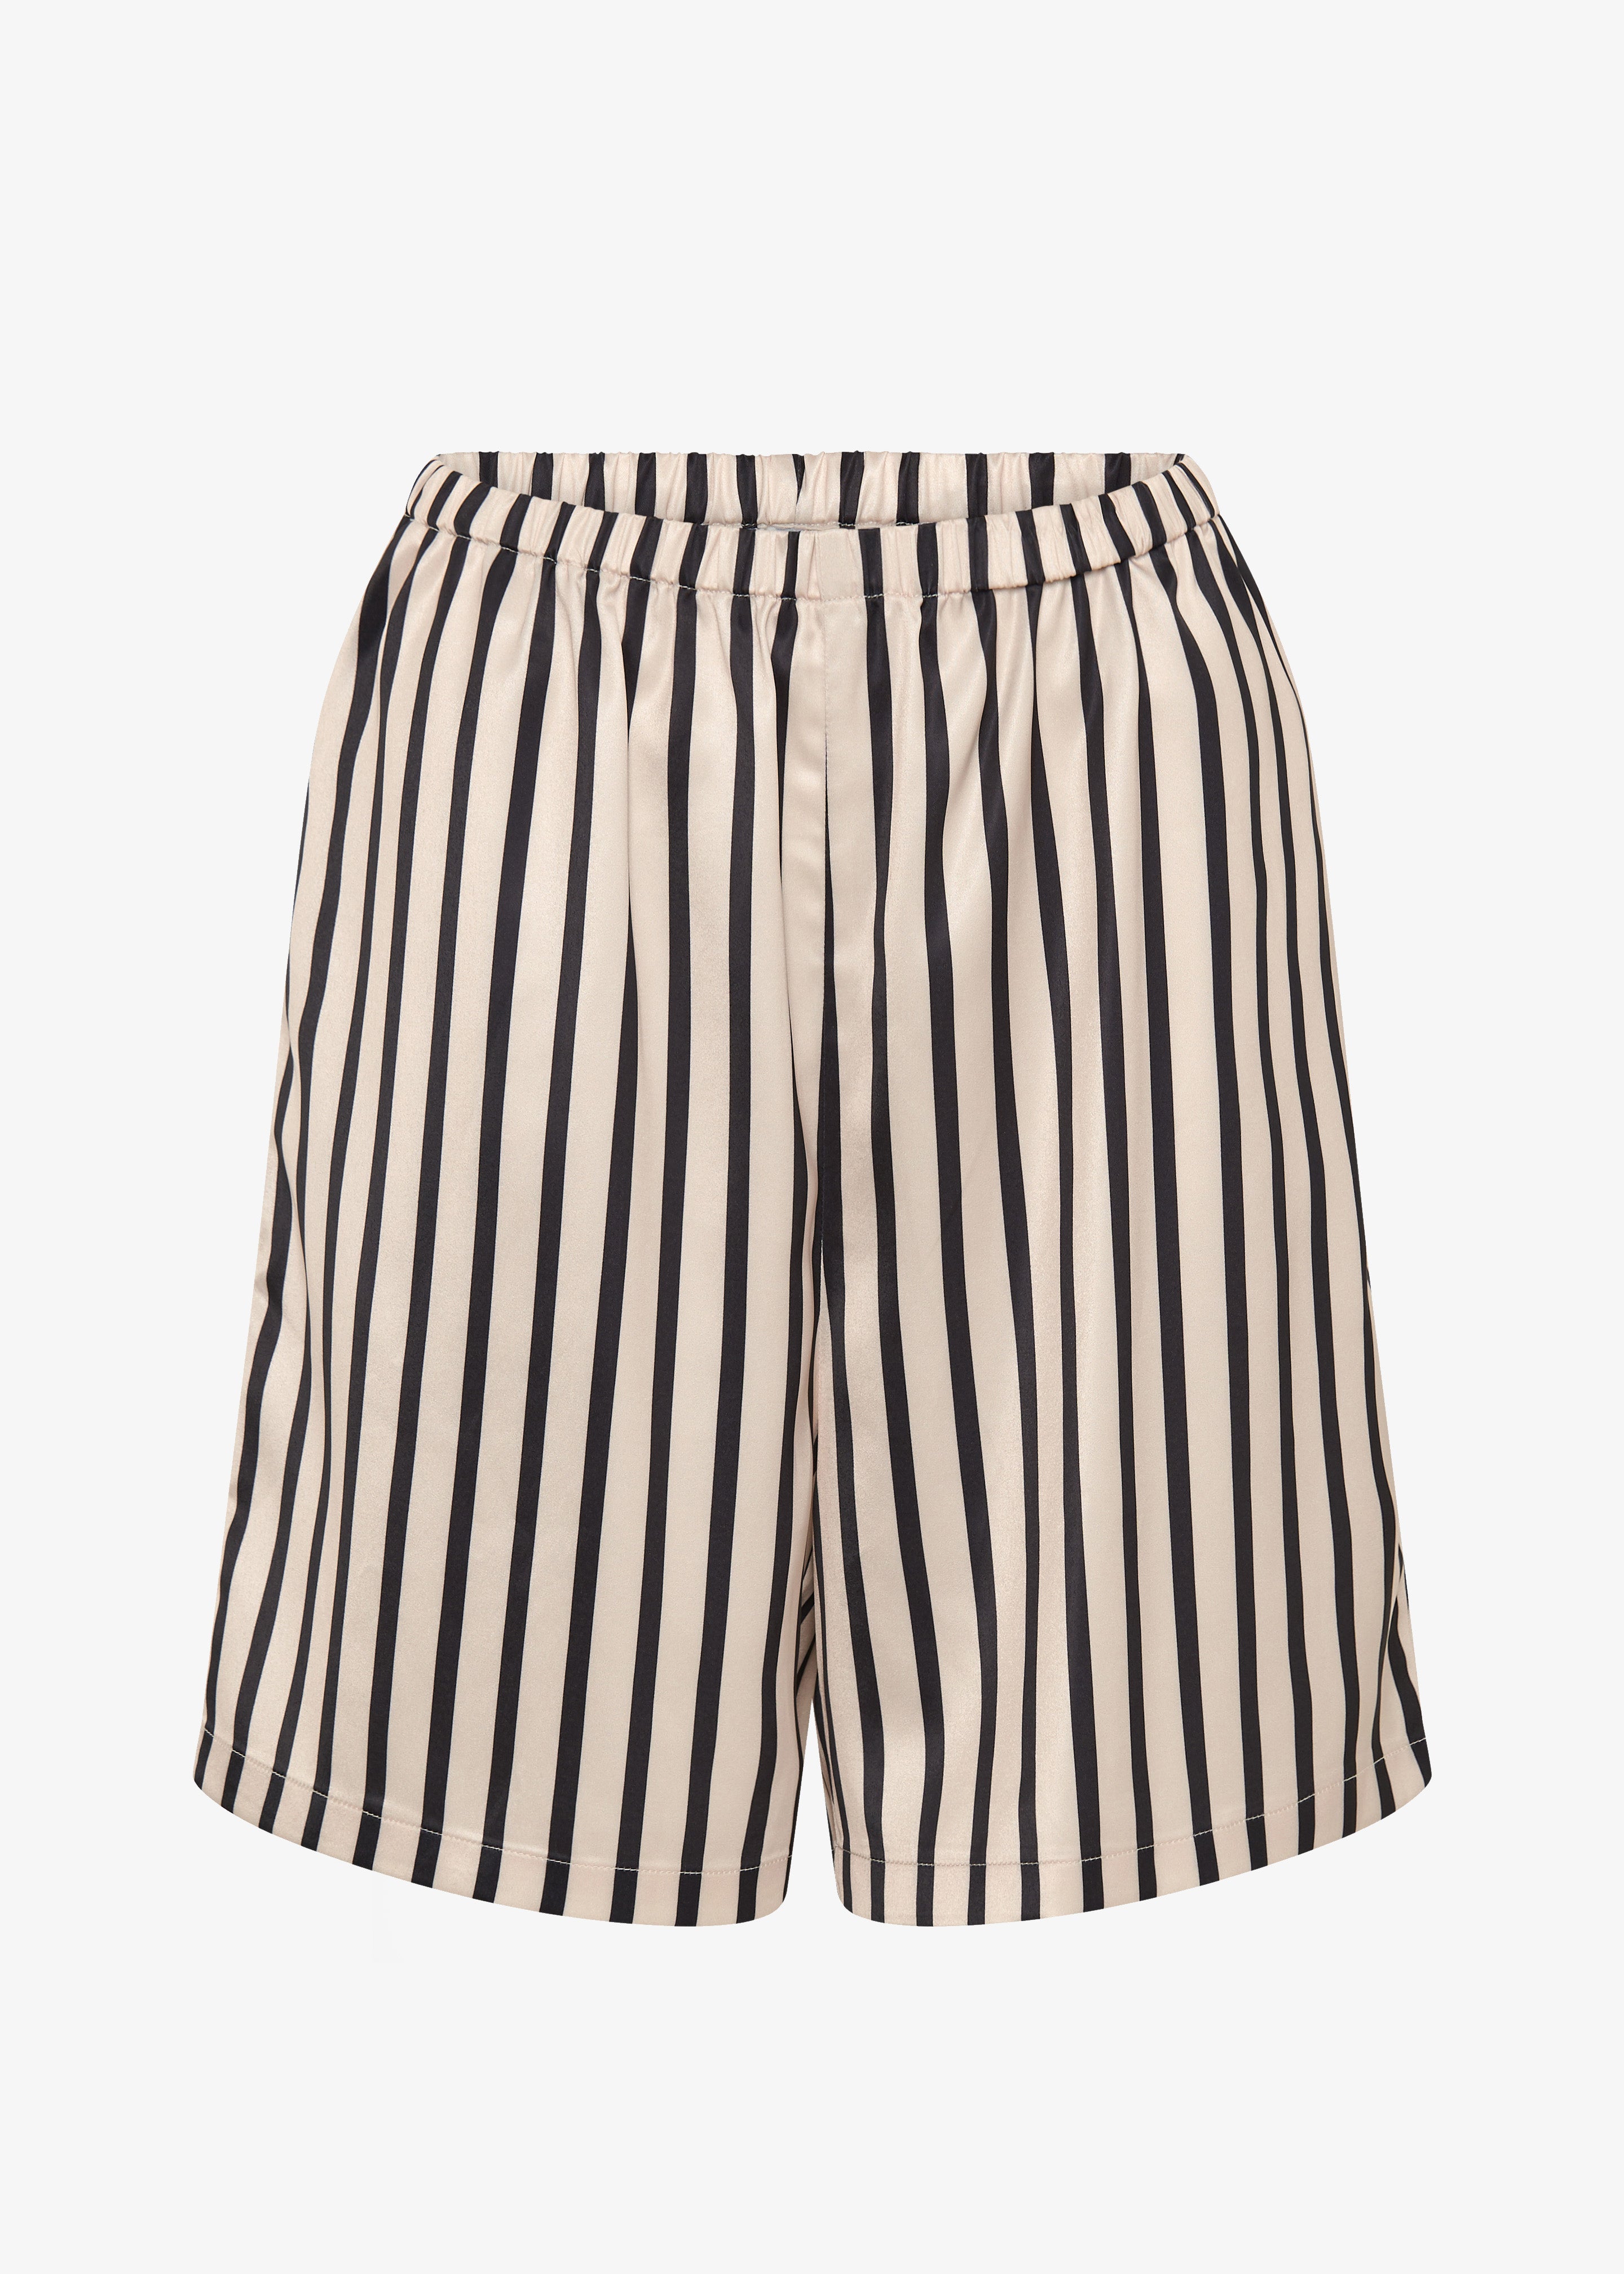 Solaqua Silk Shorts - Ecru with Black Stripes - 7